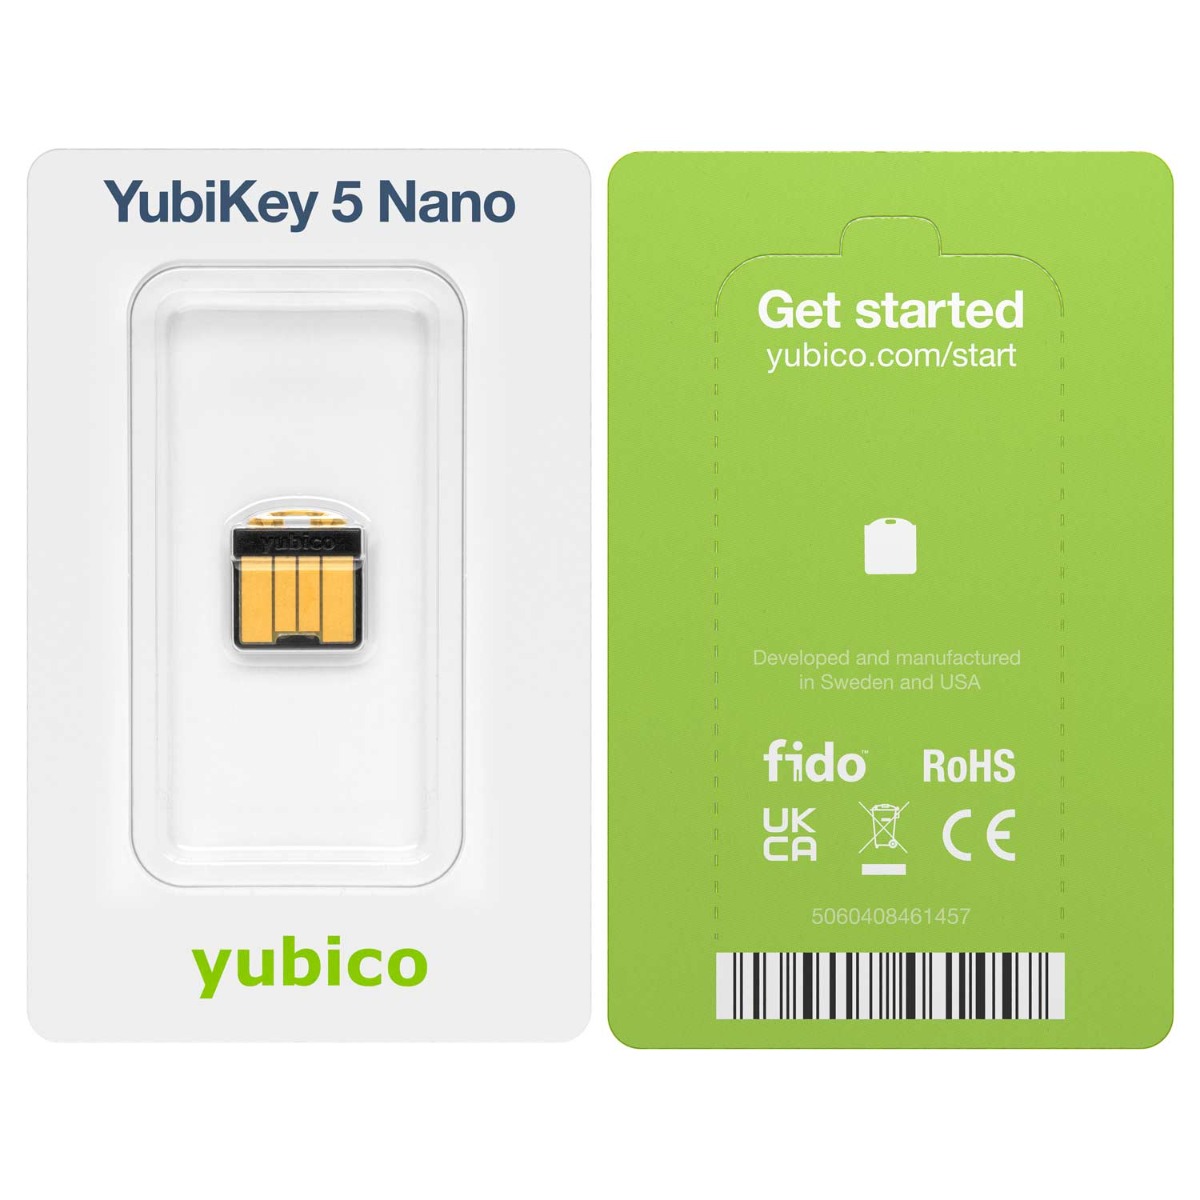 YubiKey 5 Nano